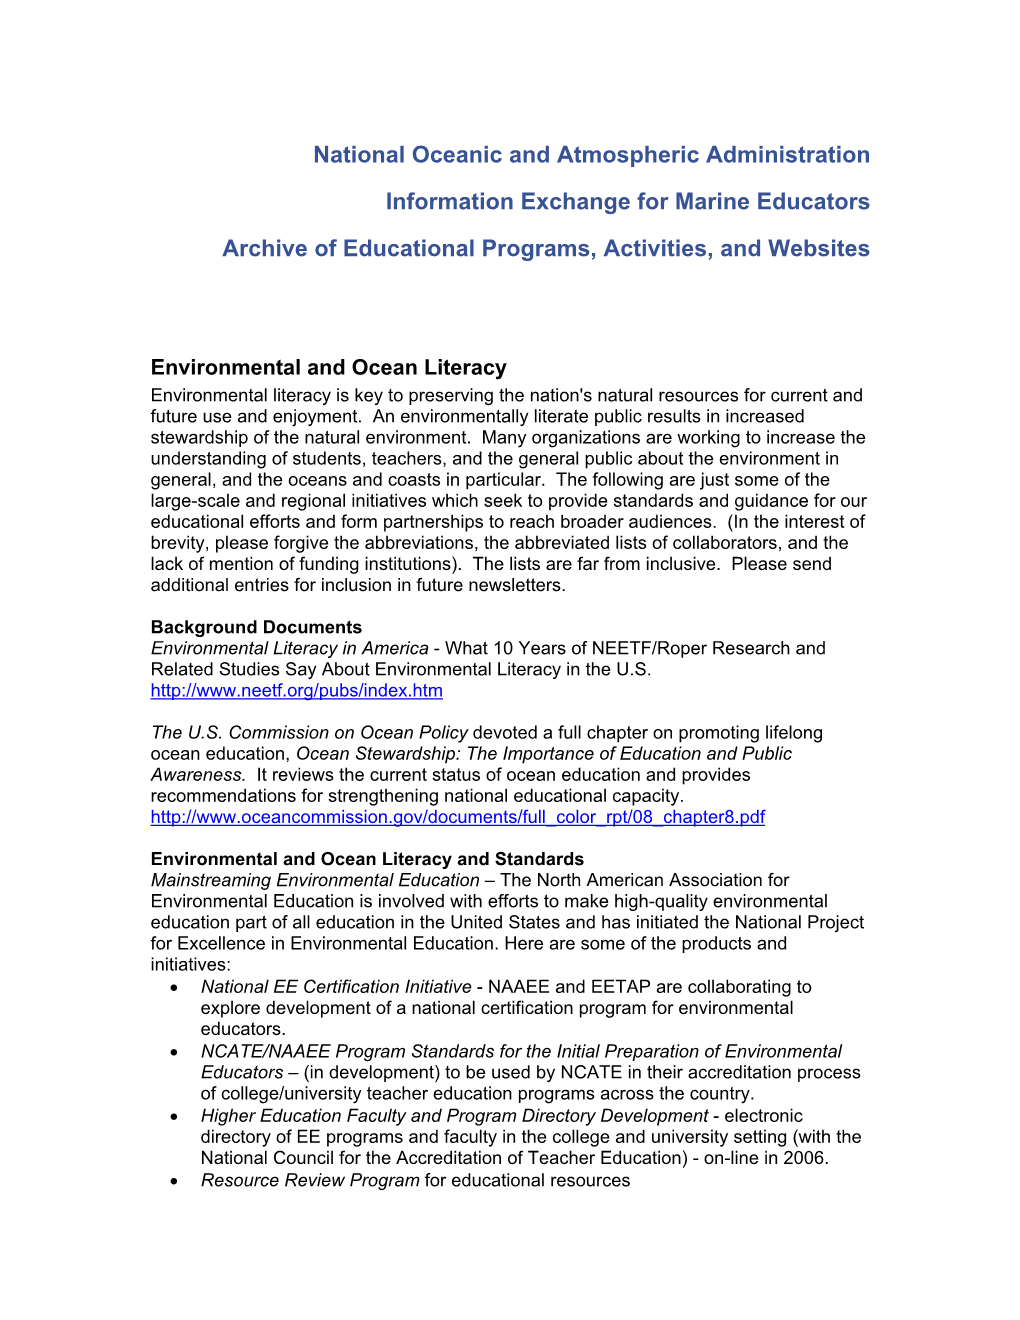 Information Exchange for Marine Educators